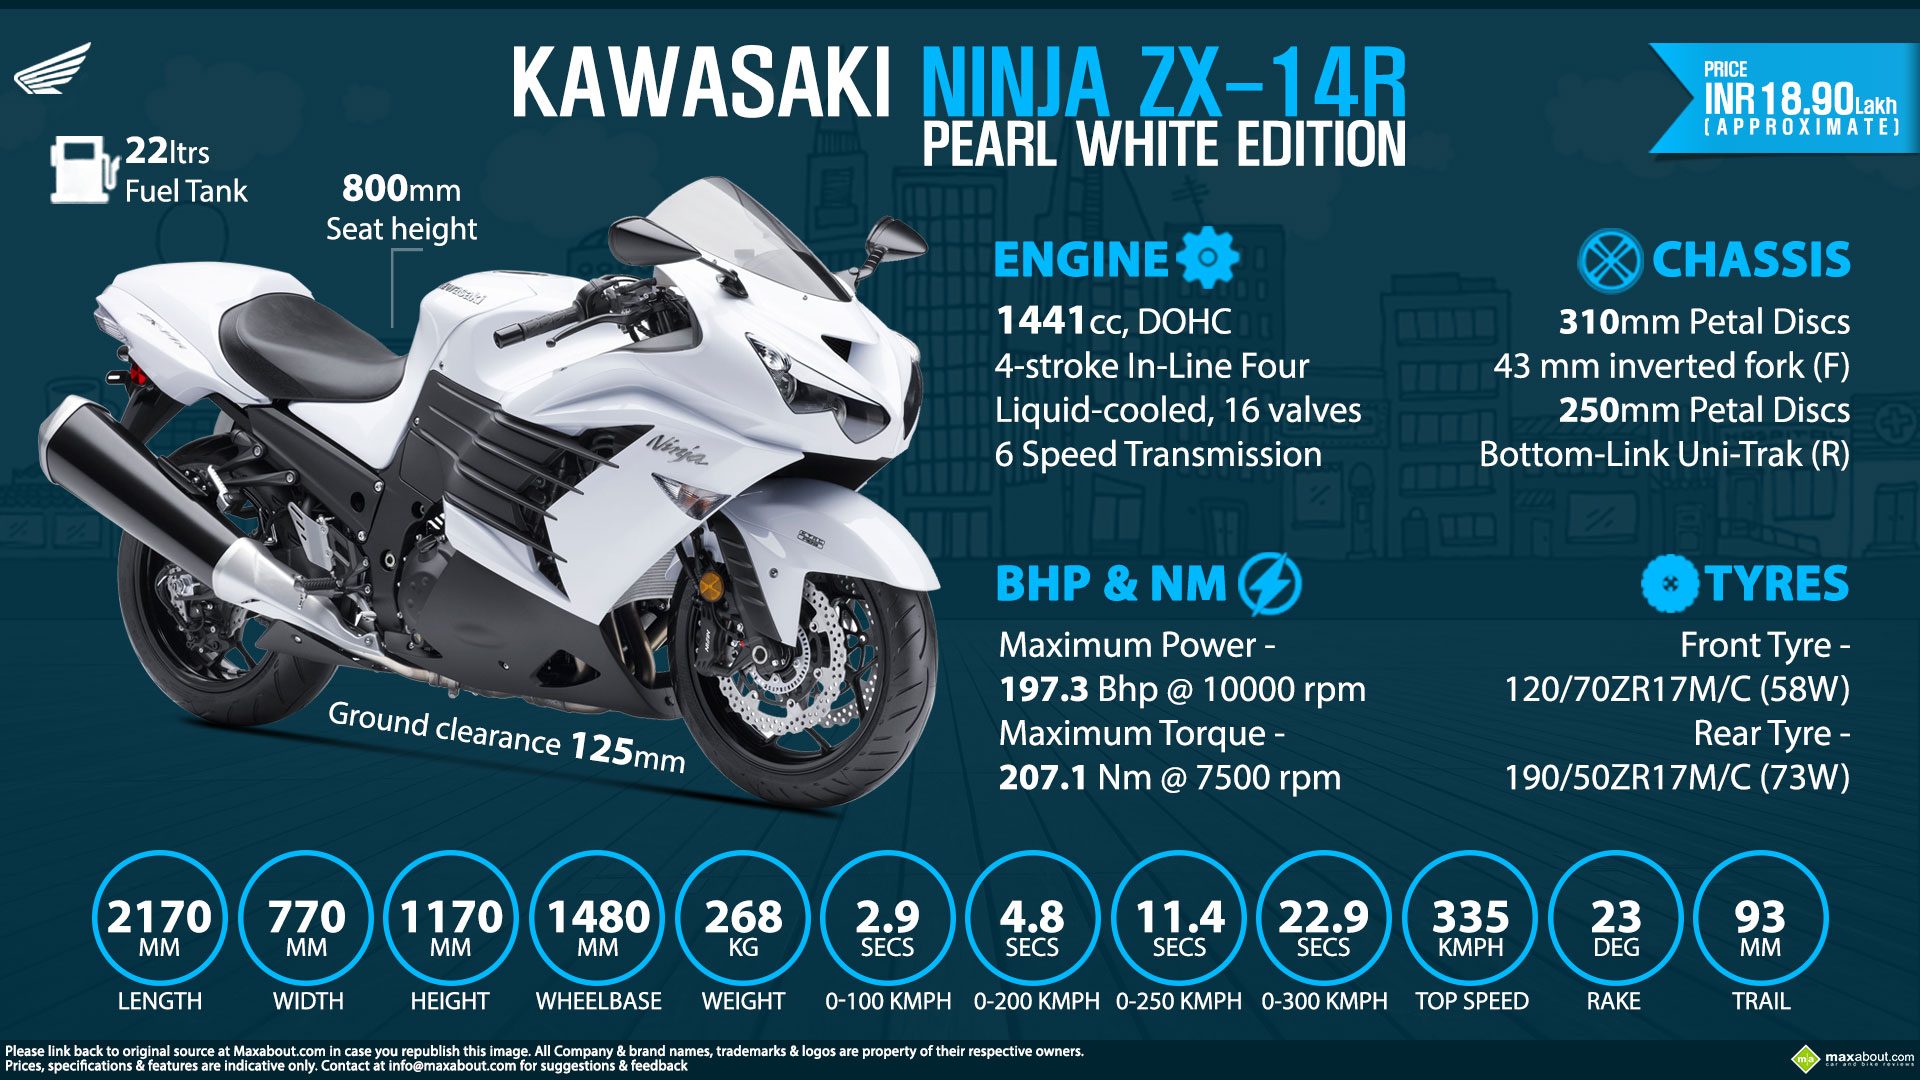 Quick Facts - Kawasaki Ninja ZX-14R Pearl White Edition